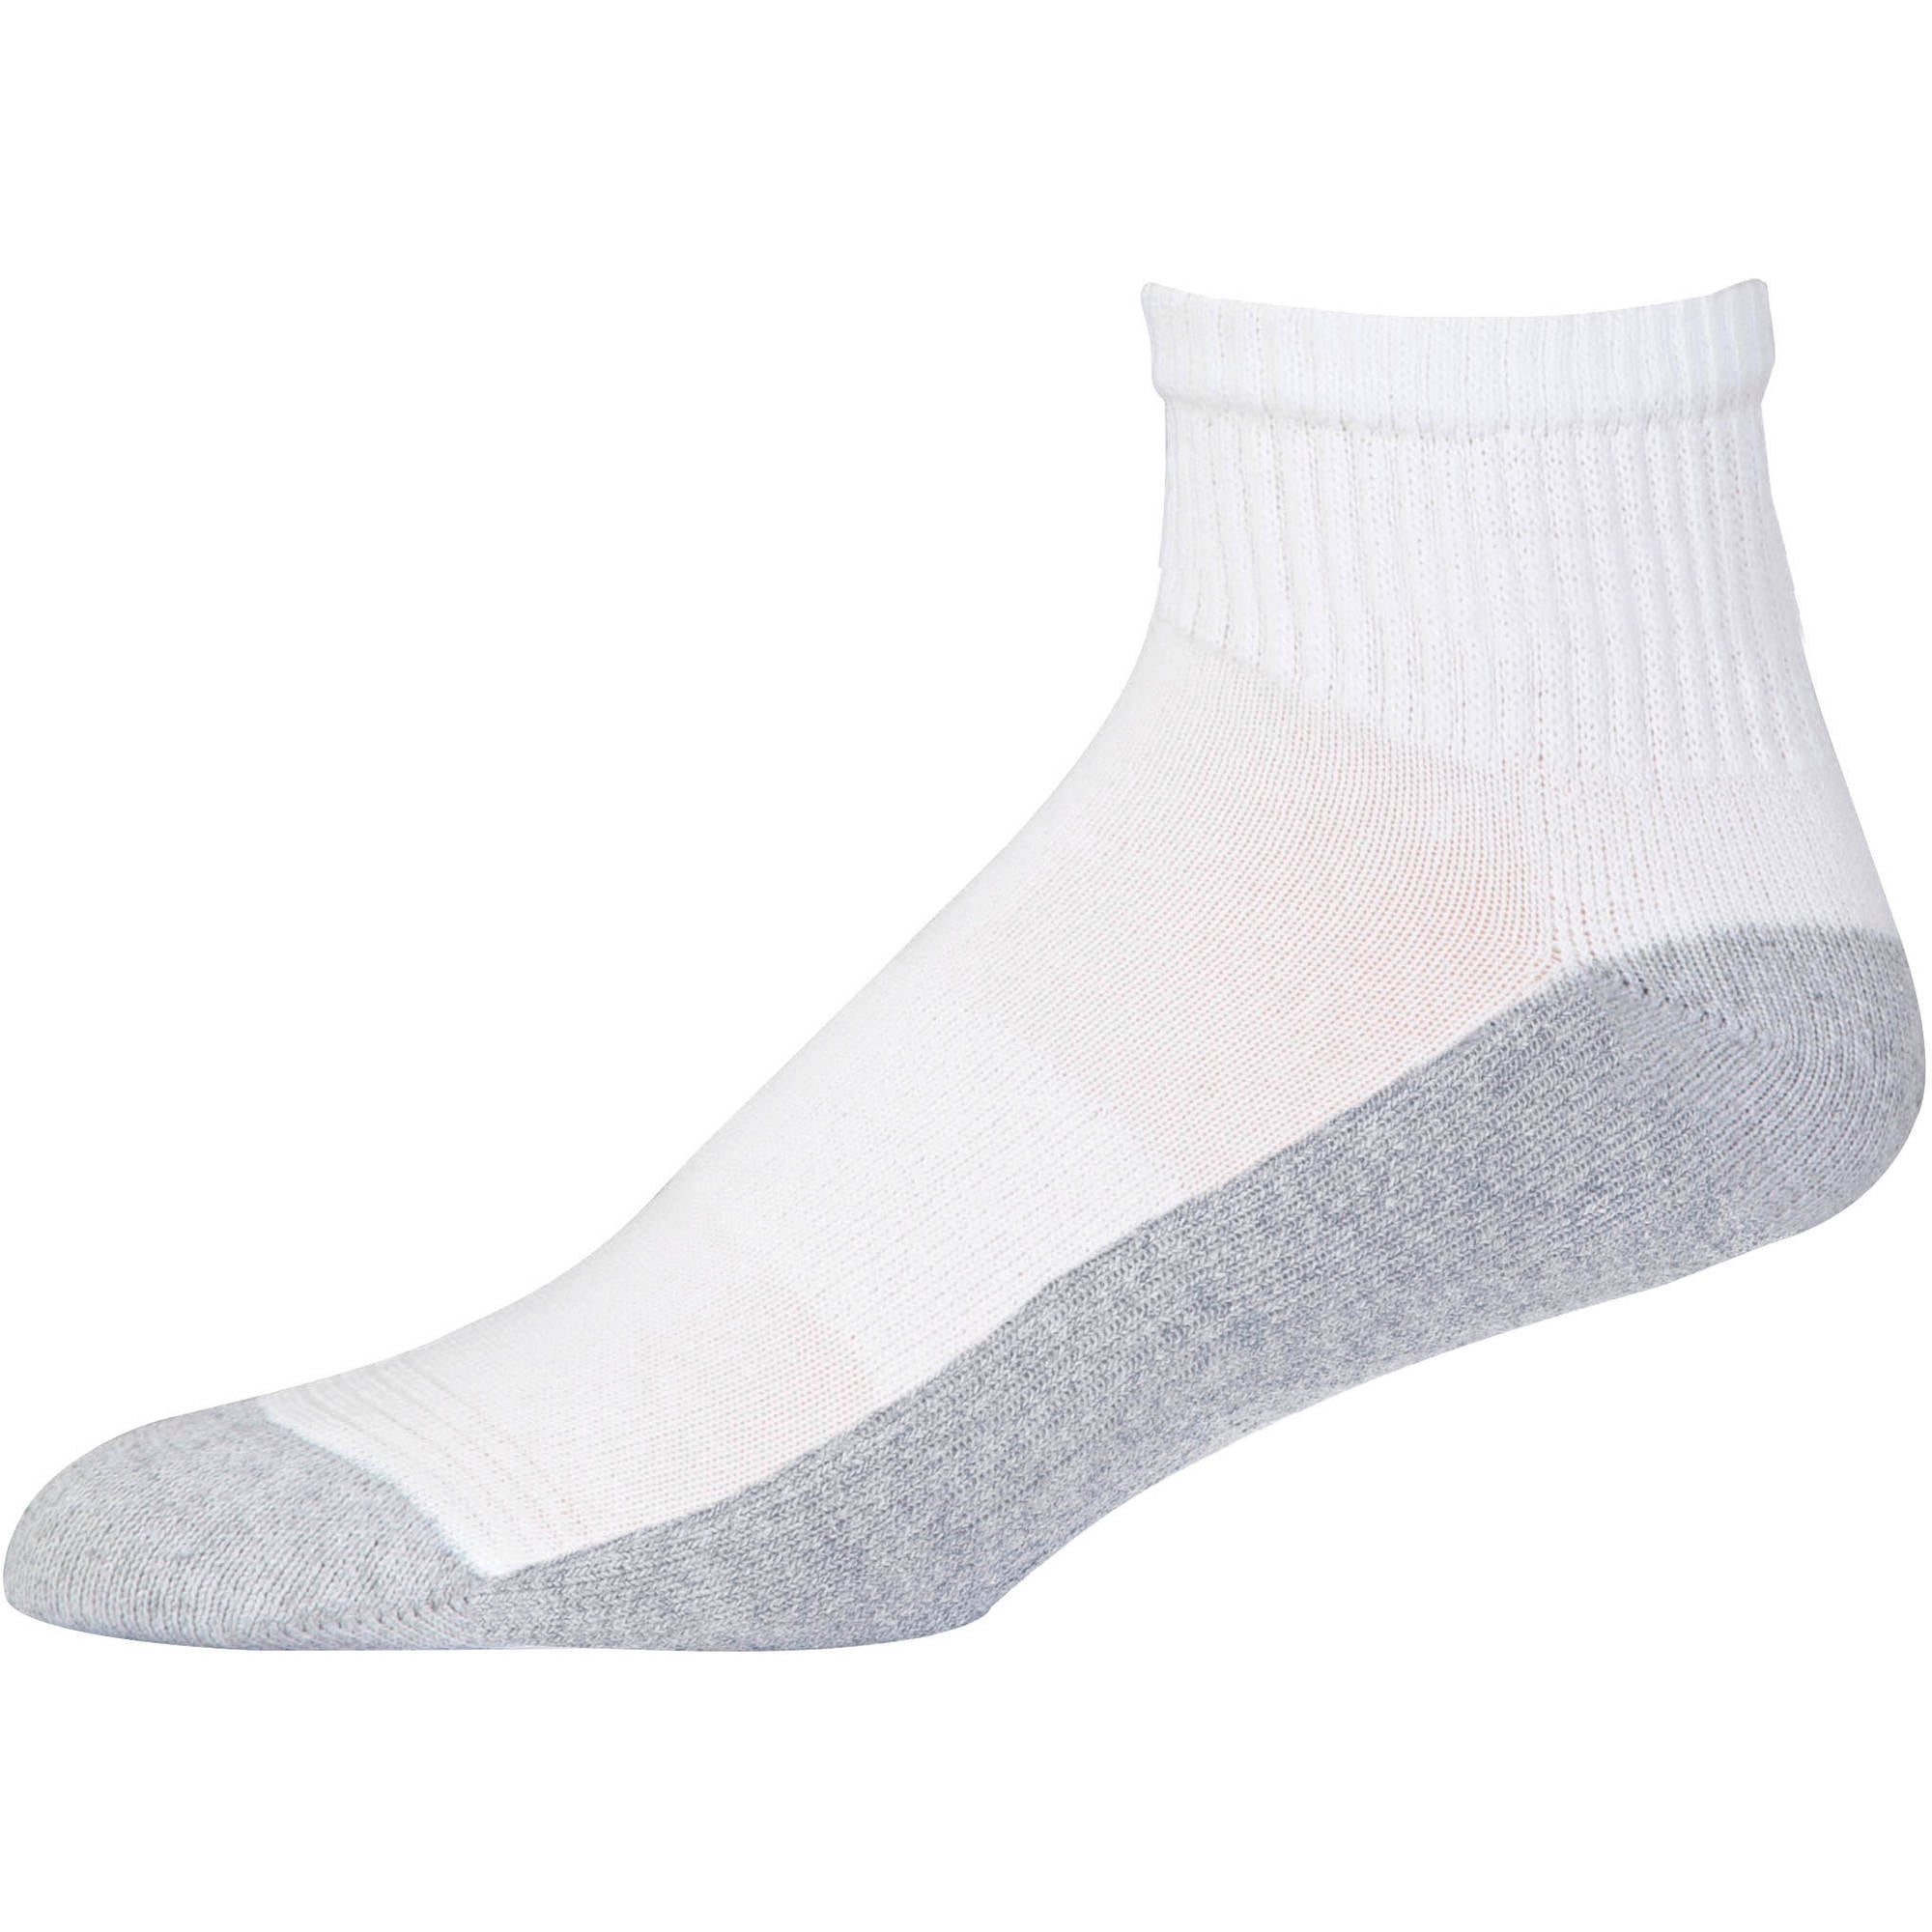 Gildan Men's Active Stretch White Ankle Socks, 10-Pack - Walmart.com